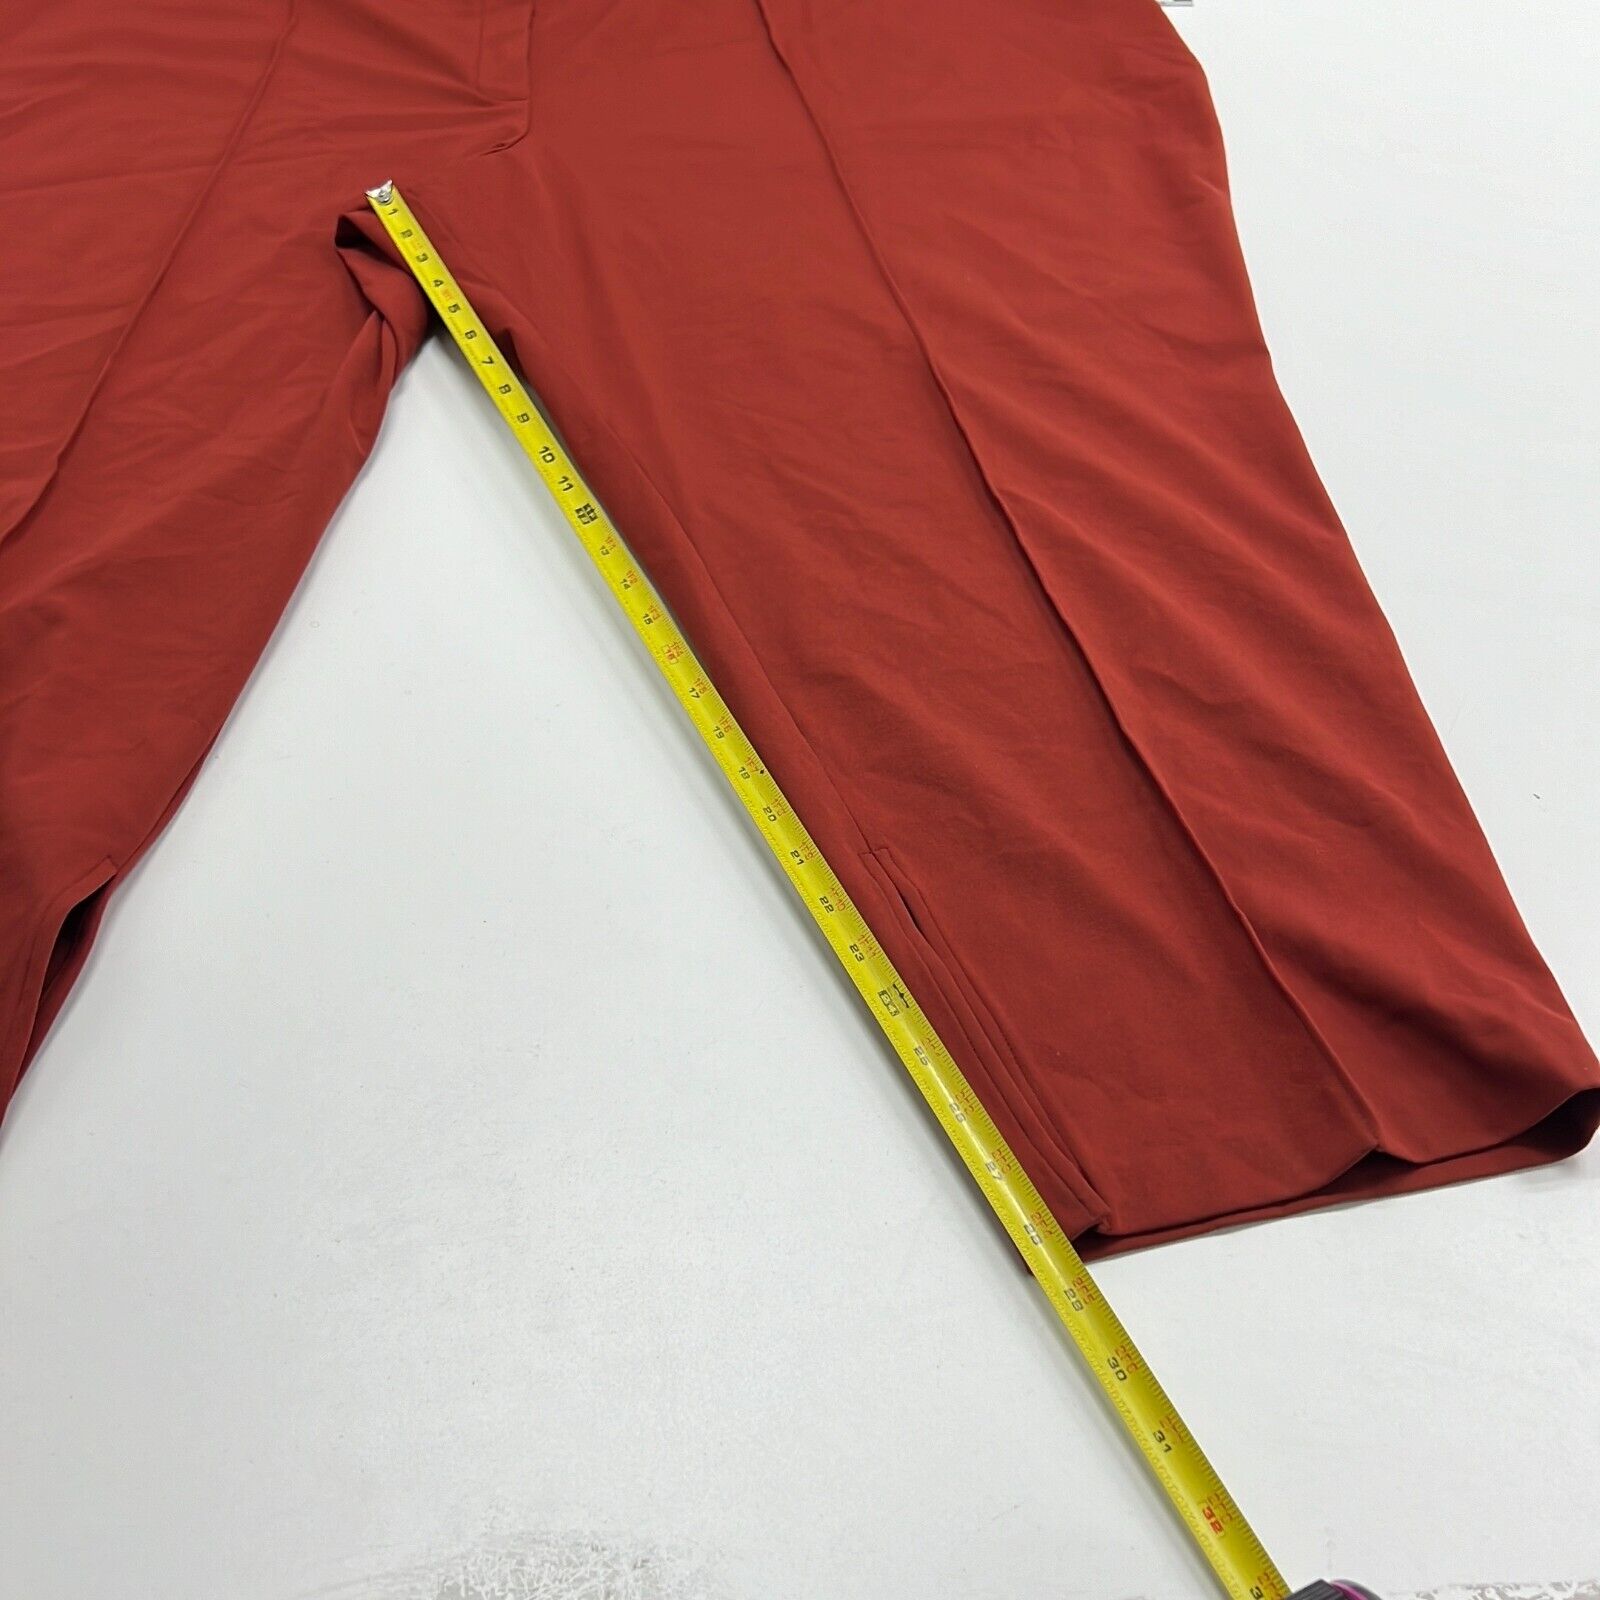 NWT Worthington Women's Orange Ultra Stretch Side Slit Trouser Pants Size 5X